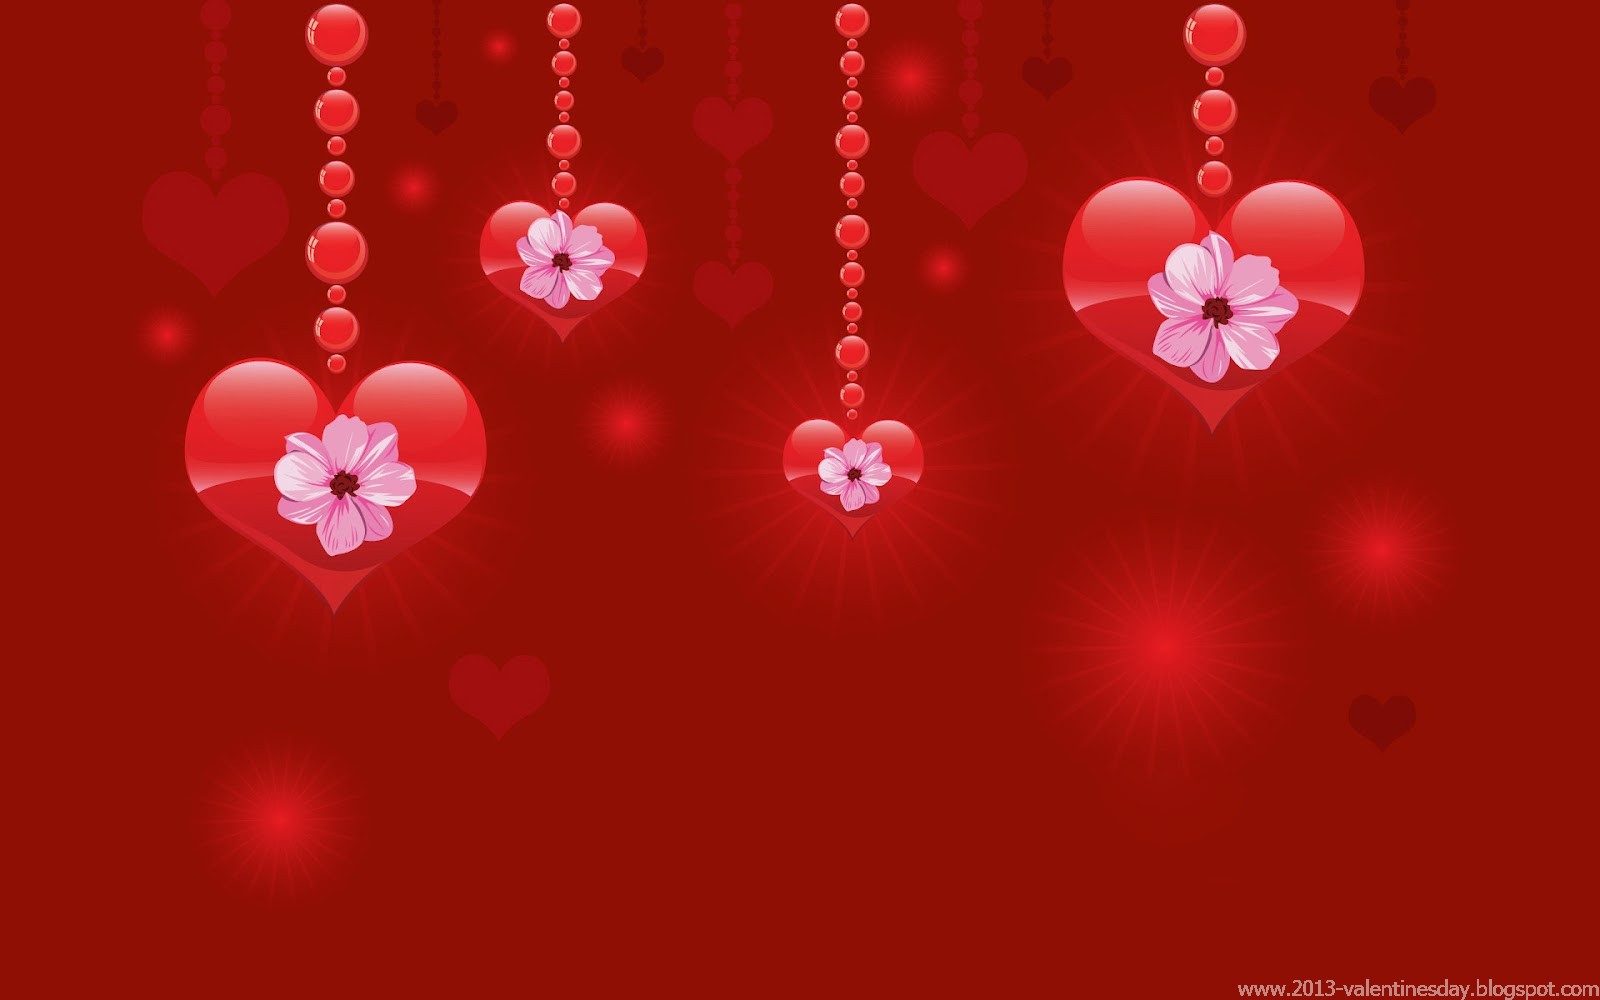 Happy Valentines day 2013 Pictures ~ Valentines day ideas, valentine's